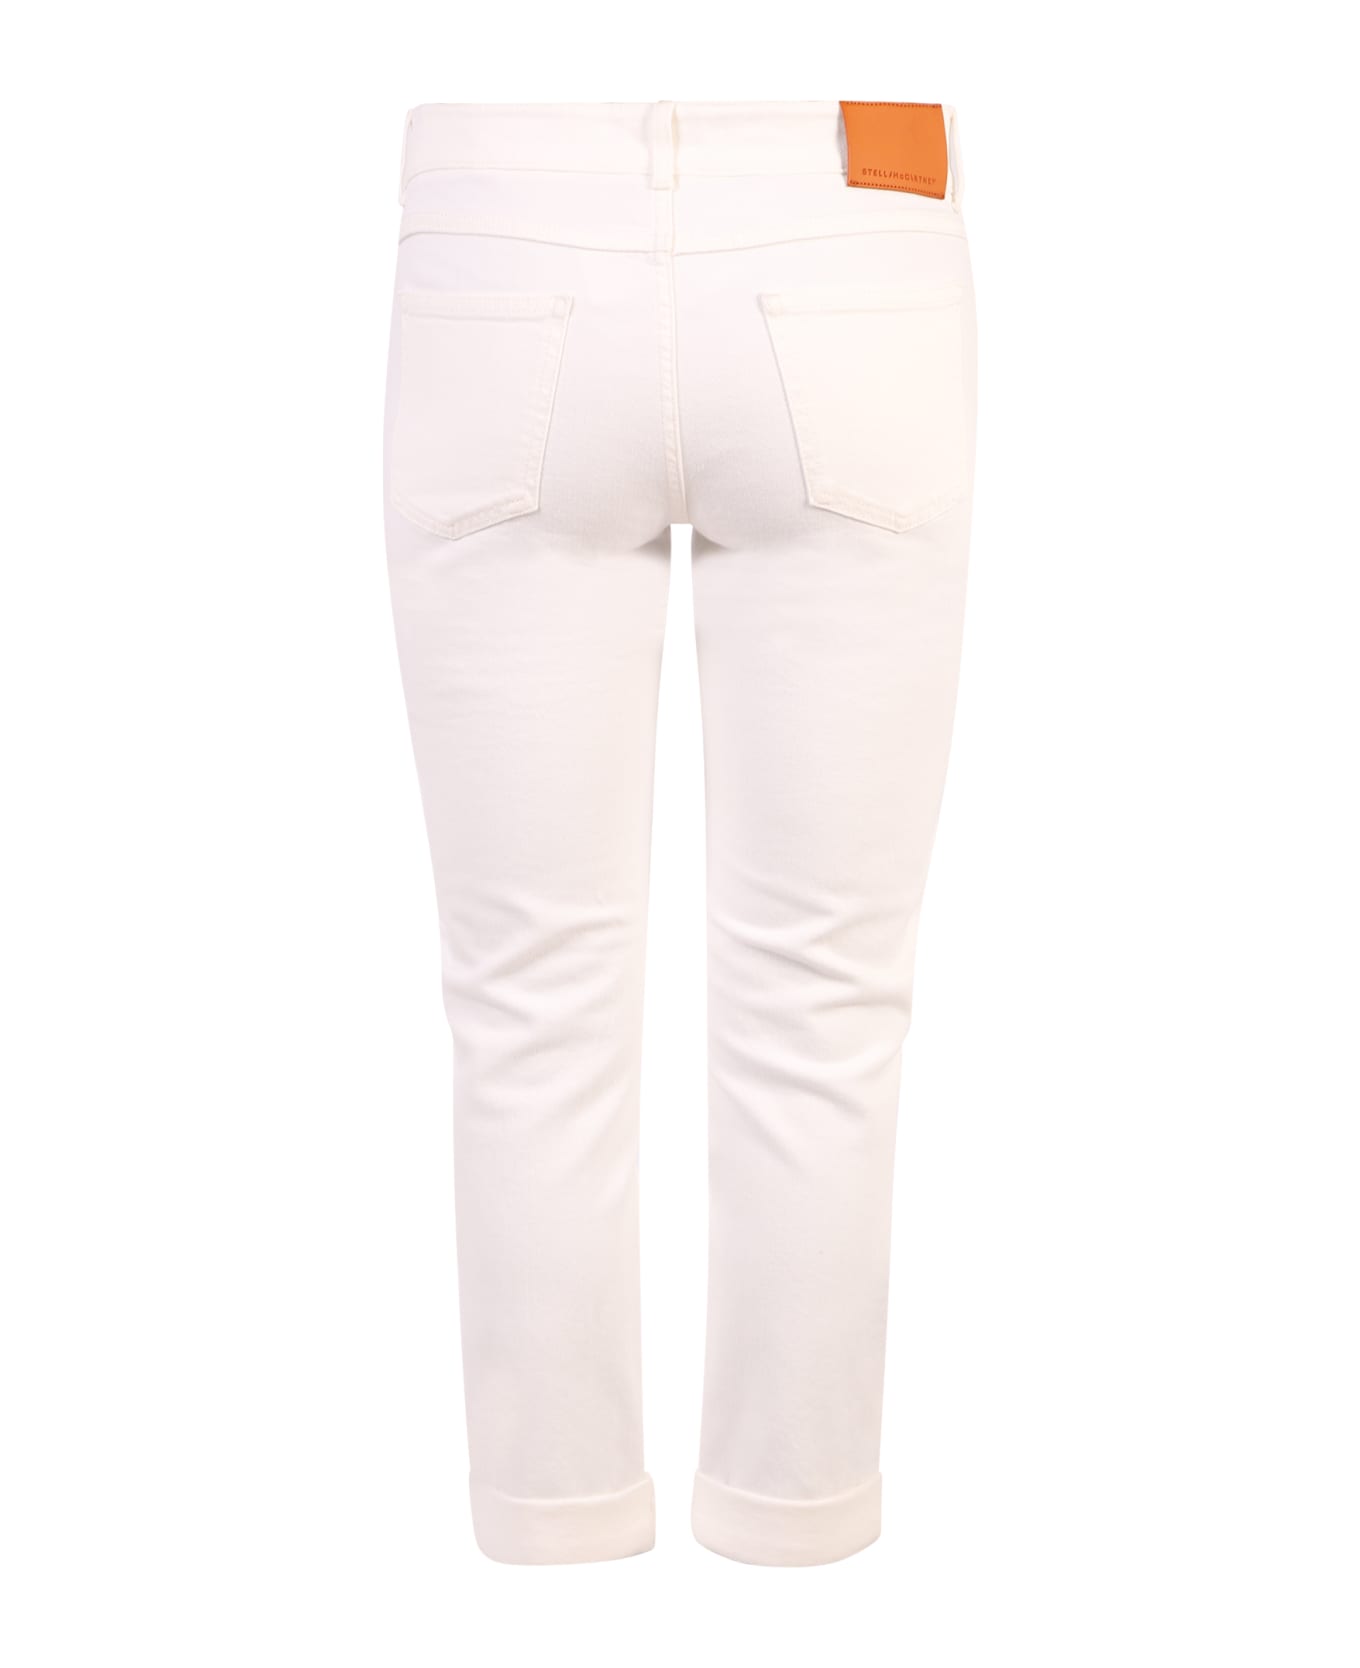 Stella McCartney Branded Jeans - Bianco ボトムス